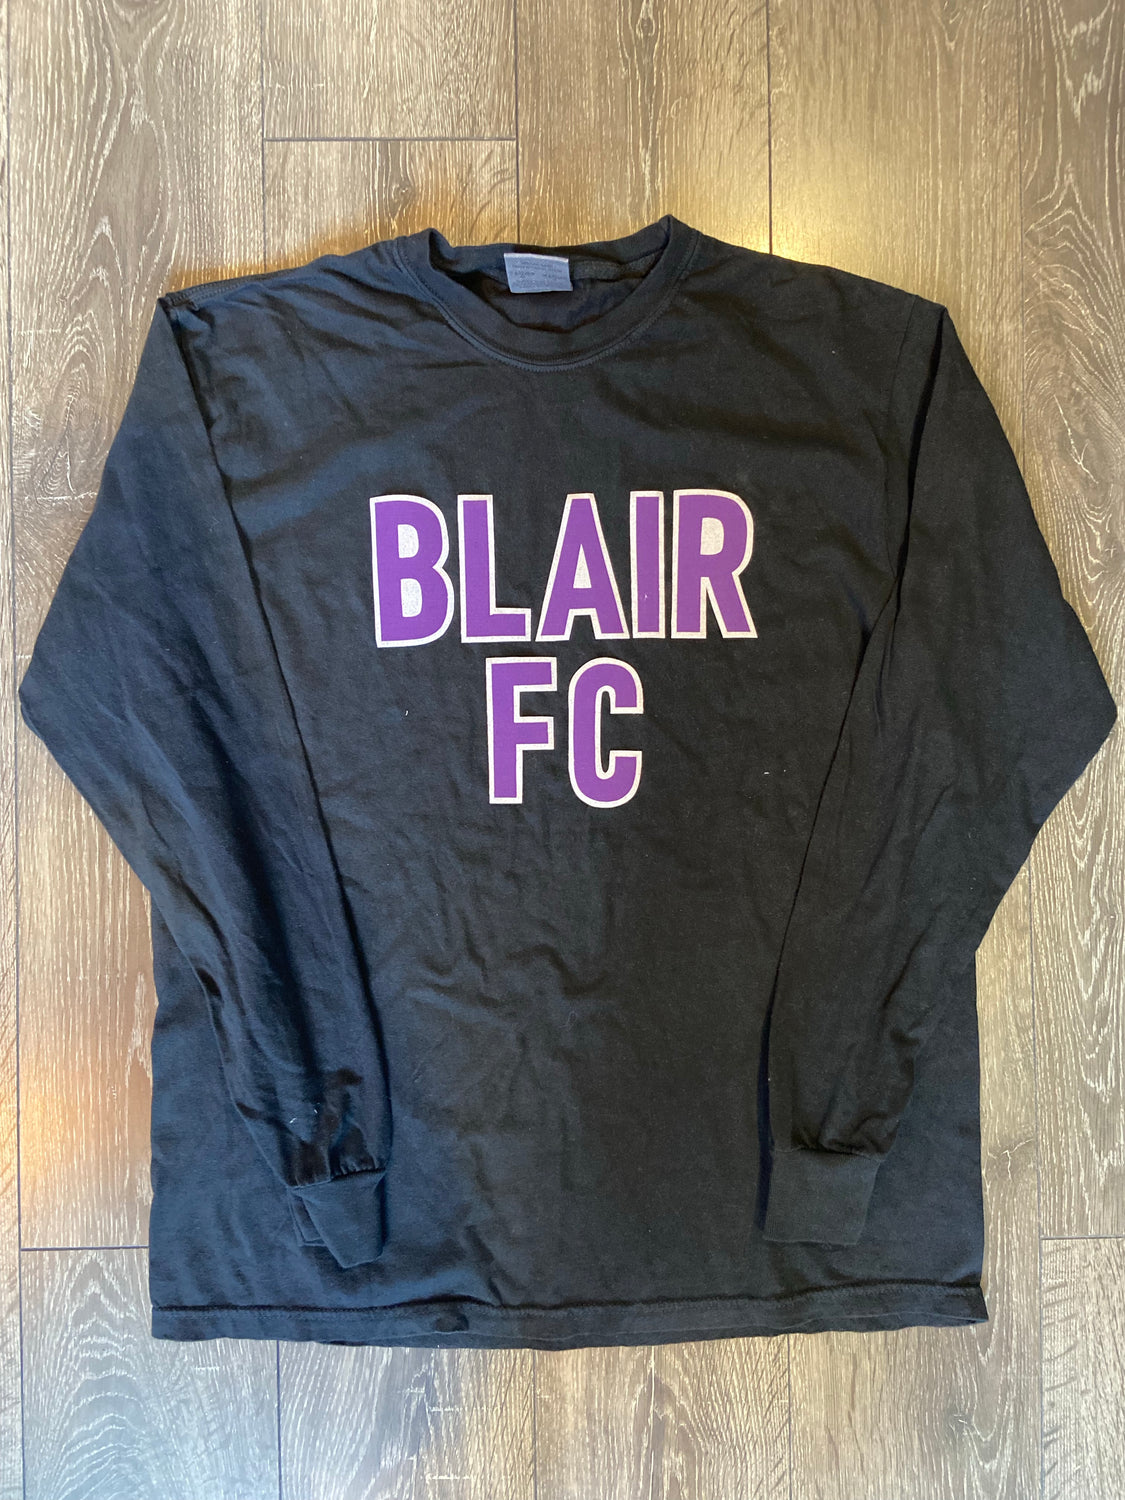 BLAIR FC - COMFORT COLORS LONG SLEEVE